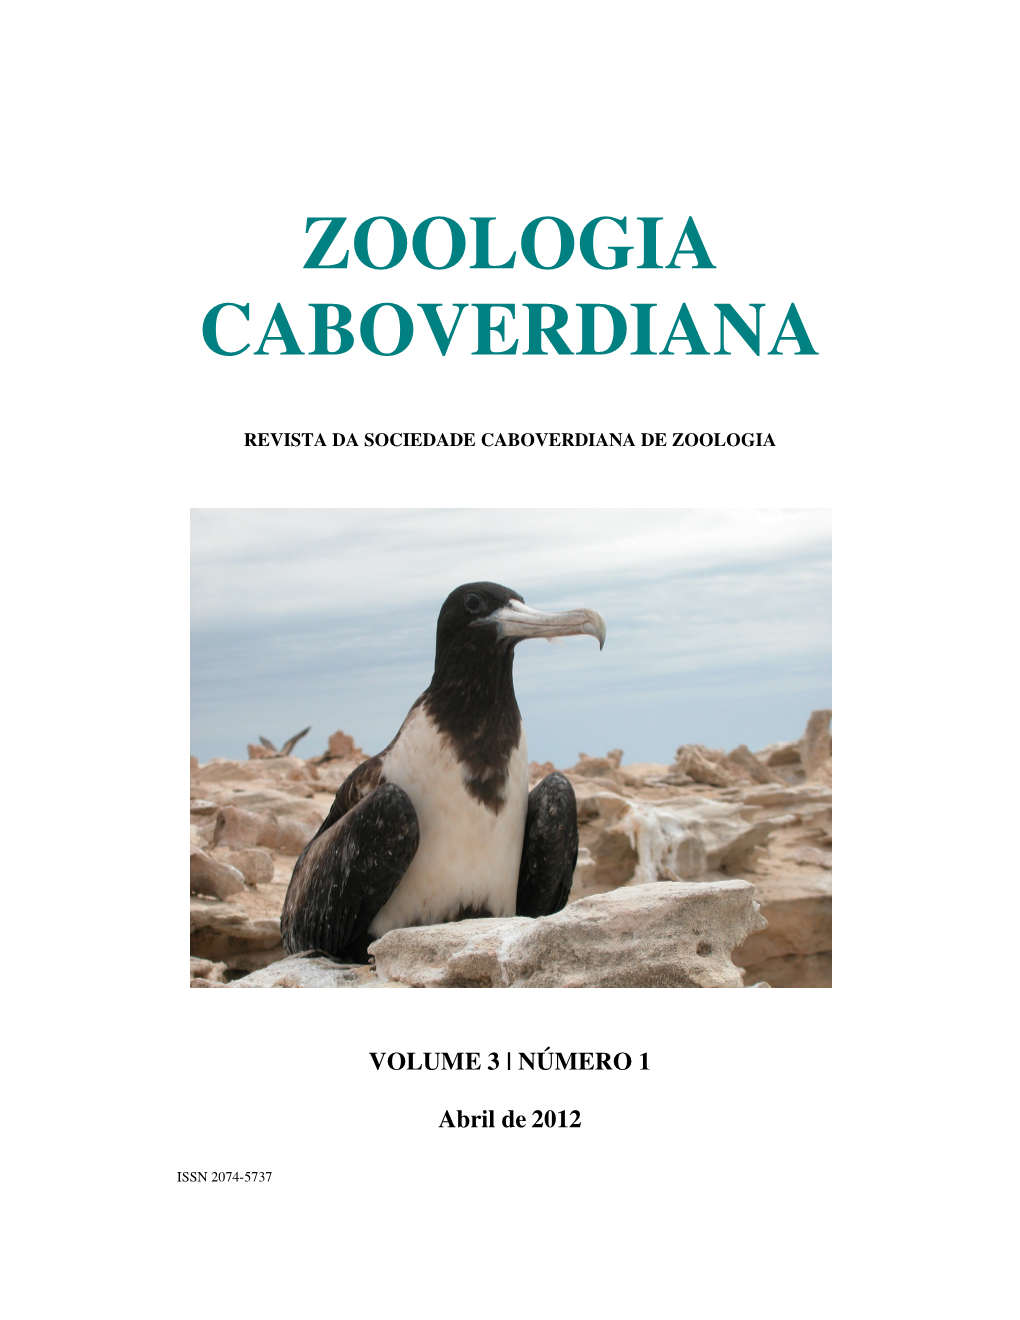 Zoologia Caboverdiana Vol. 3, No. 1